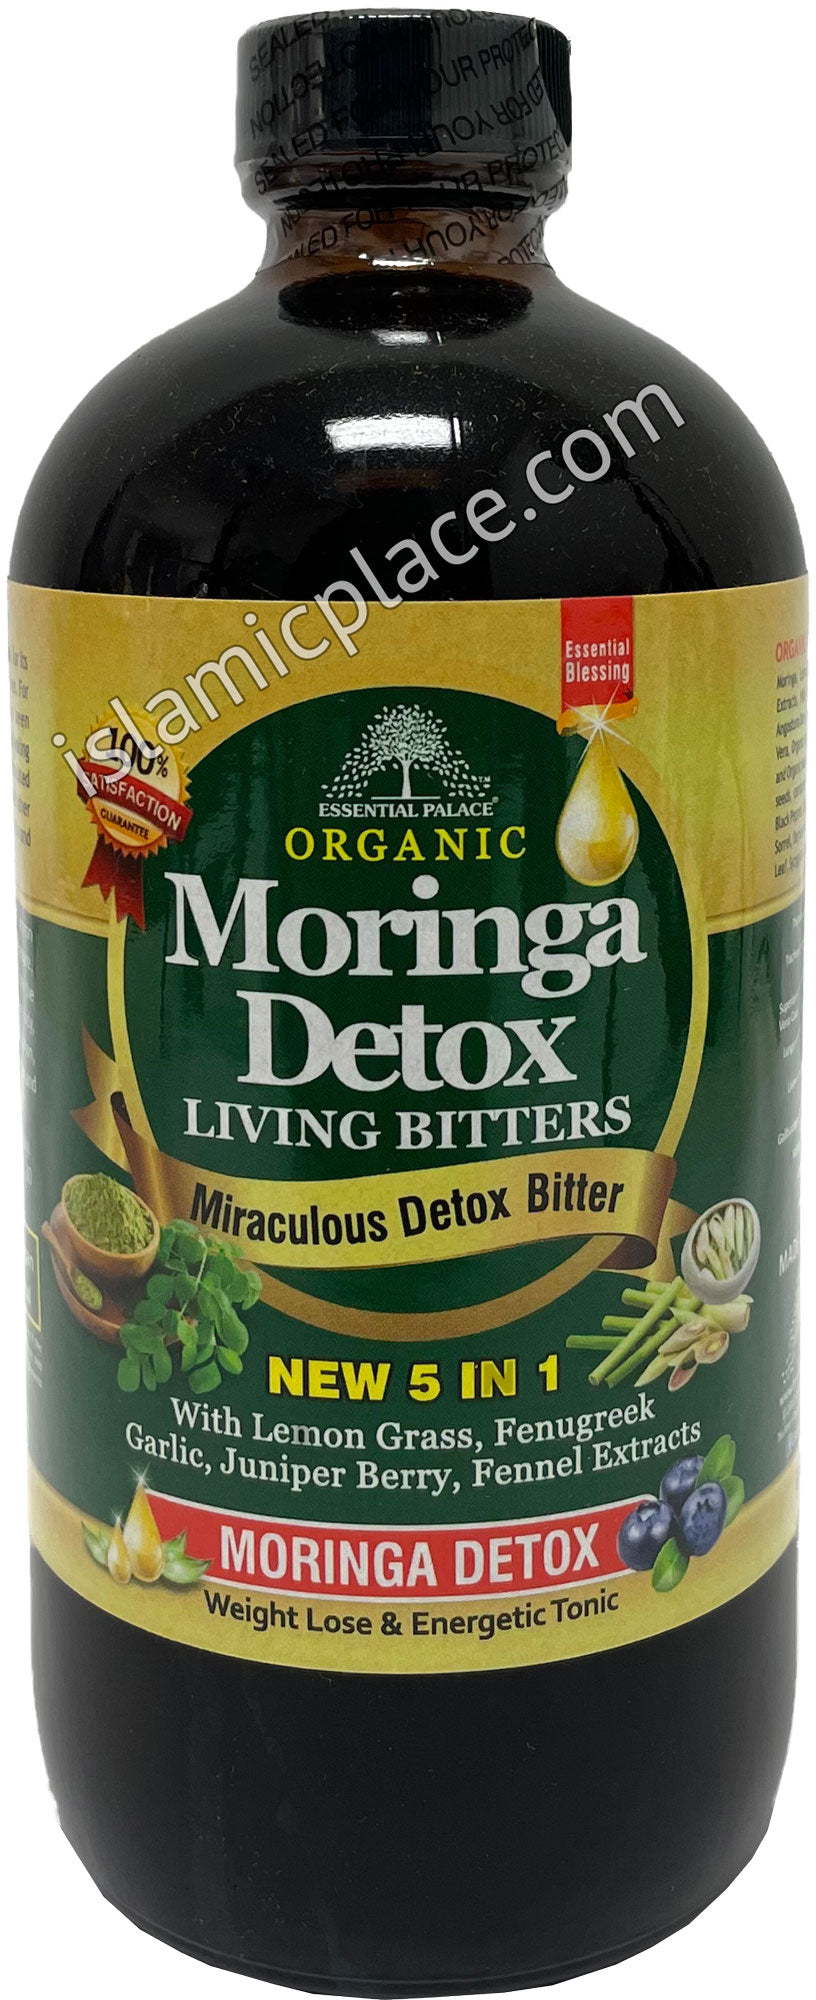 Moringa Detox Living Bitters - Miraculous Detox Bitter 16oz